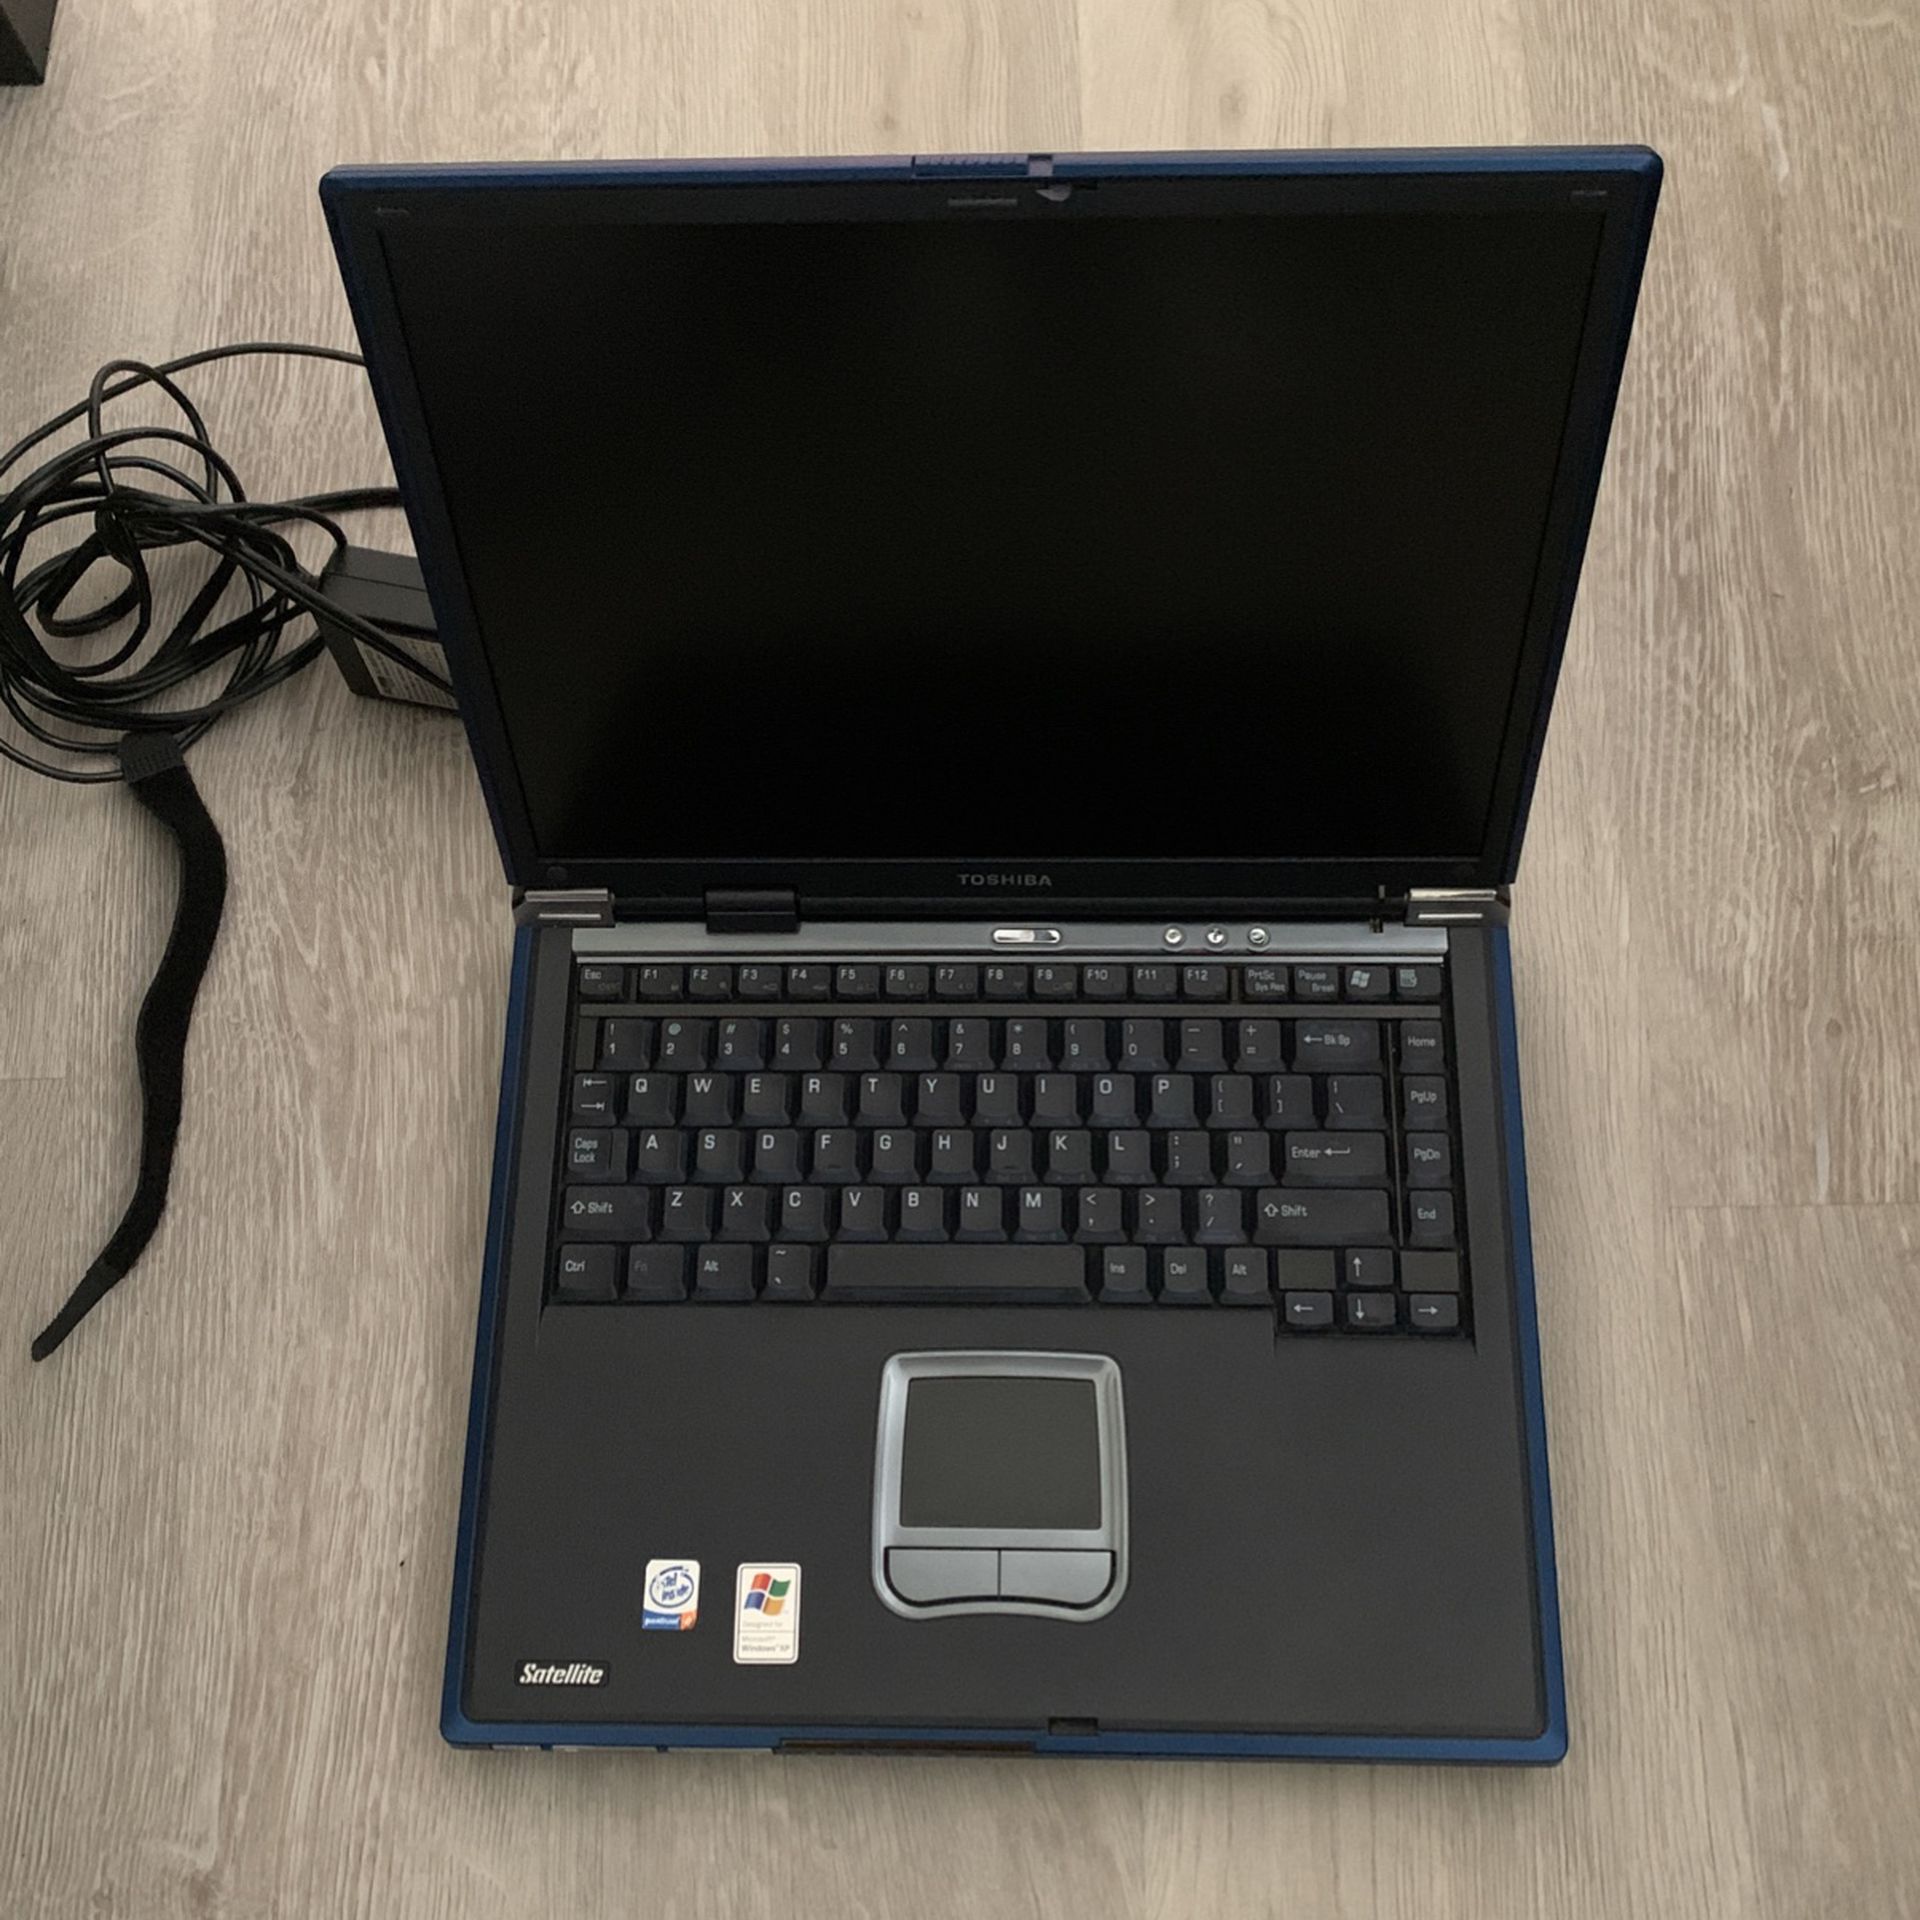 Toshiba Laptop 2008